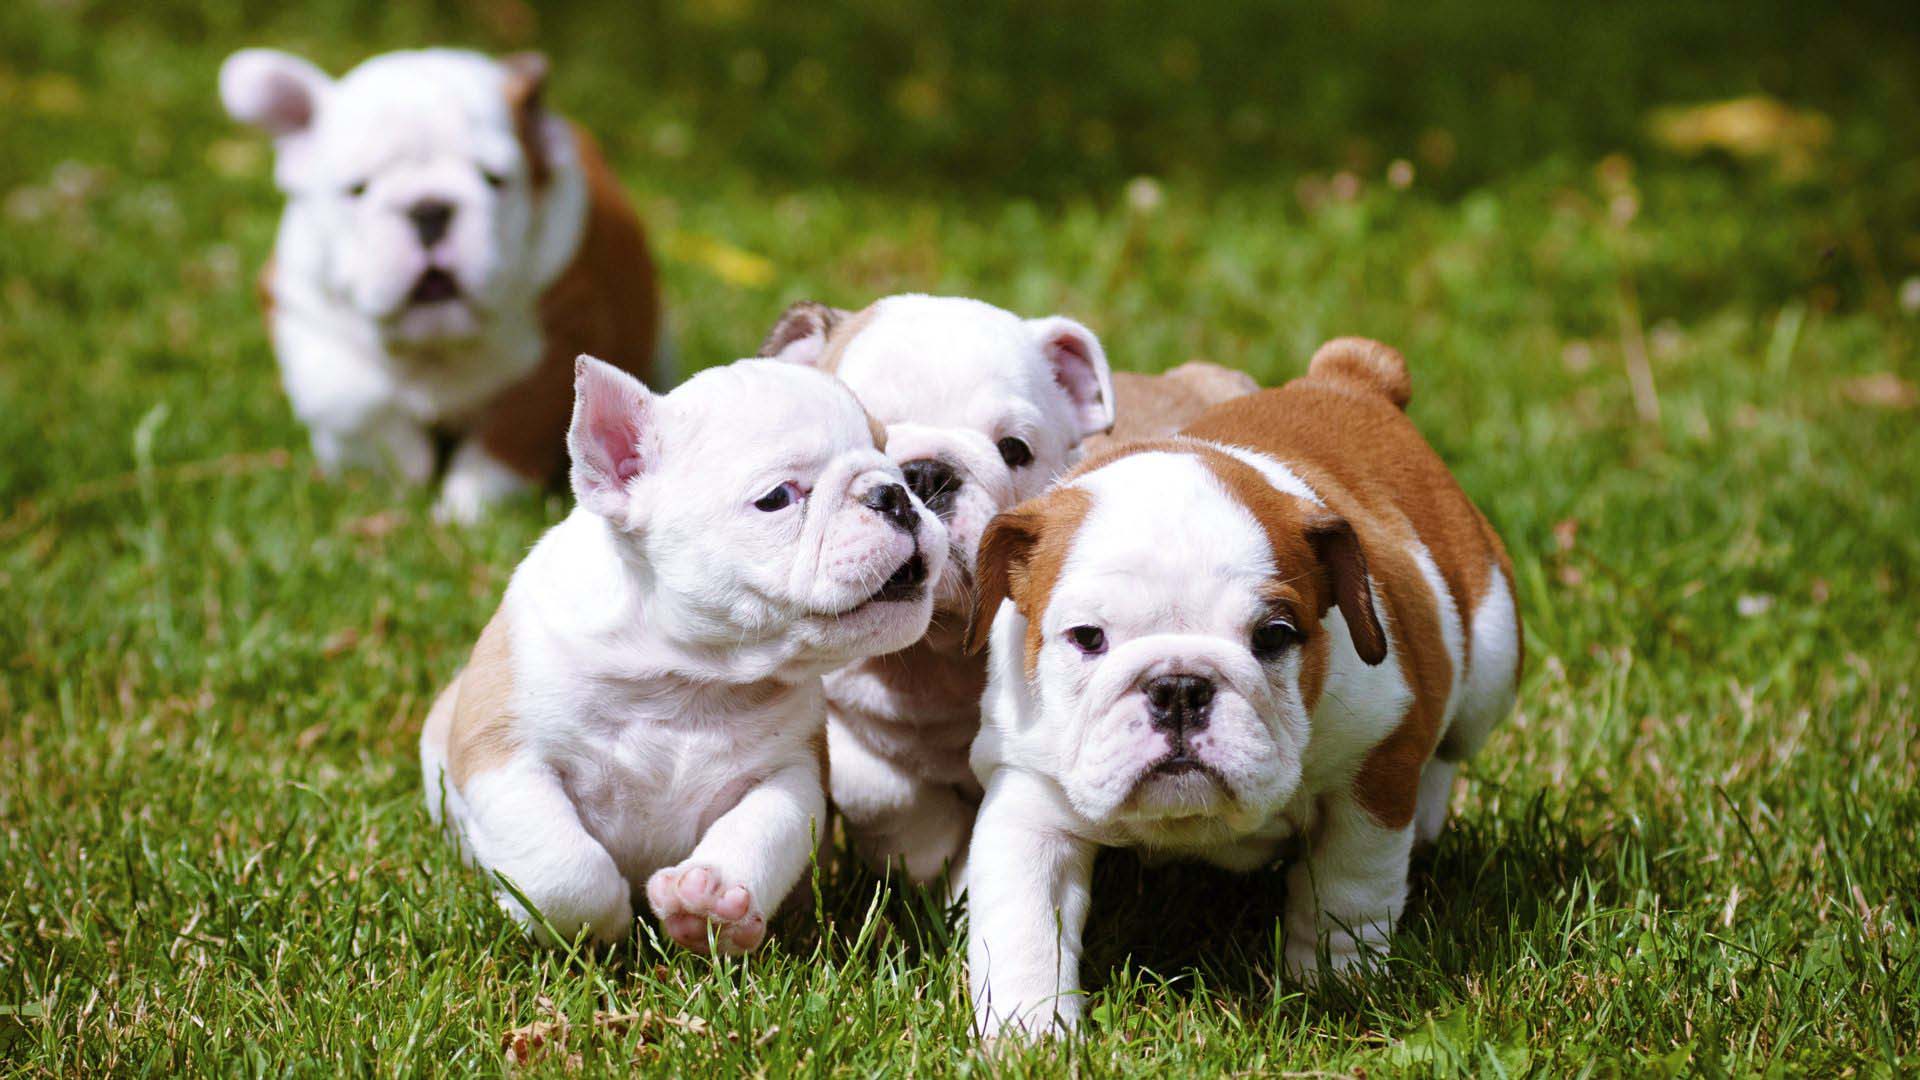 Bulldog Puppies Running Together .teahub.io